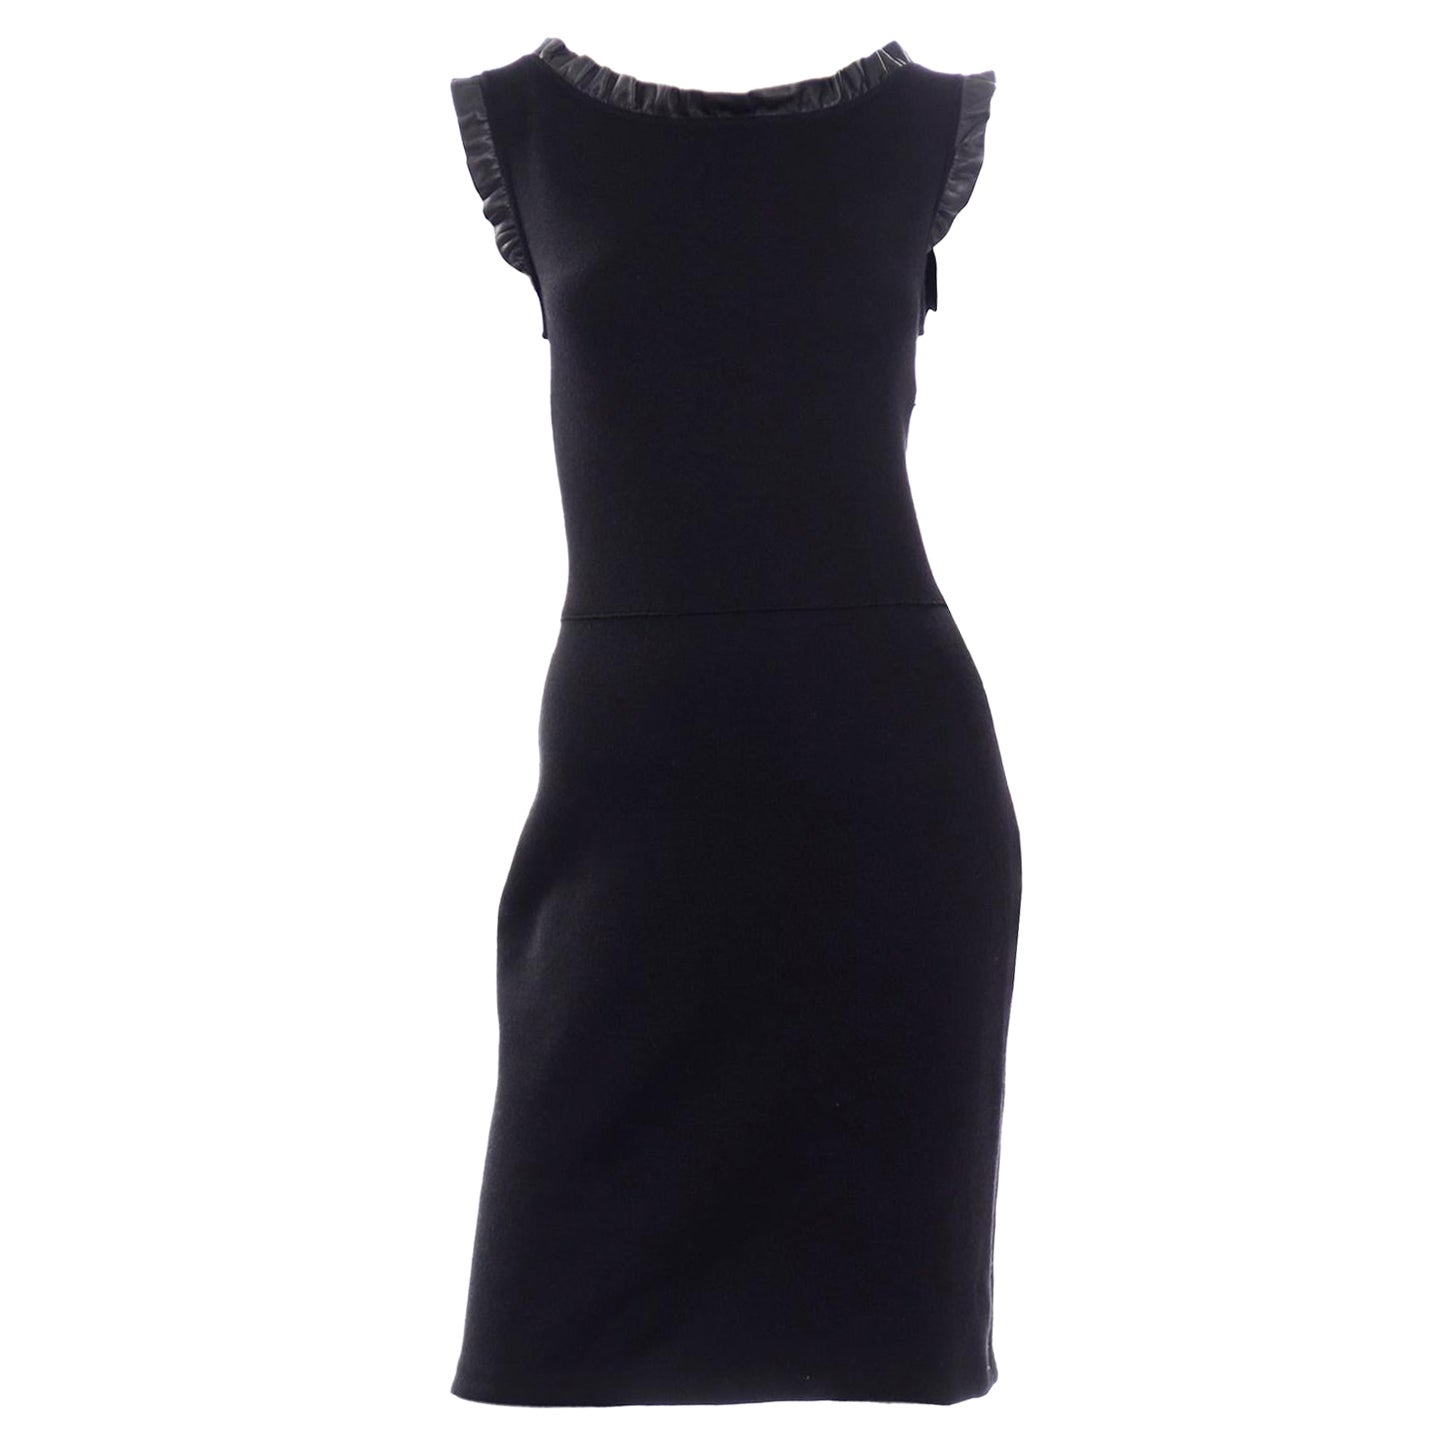 Christian Dior Paris Little Black Dress in Cashmere Silk Blend w Leather Ruffle For Sale